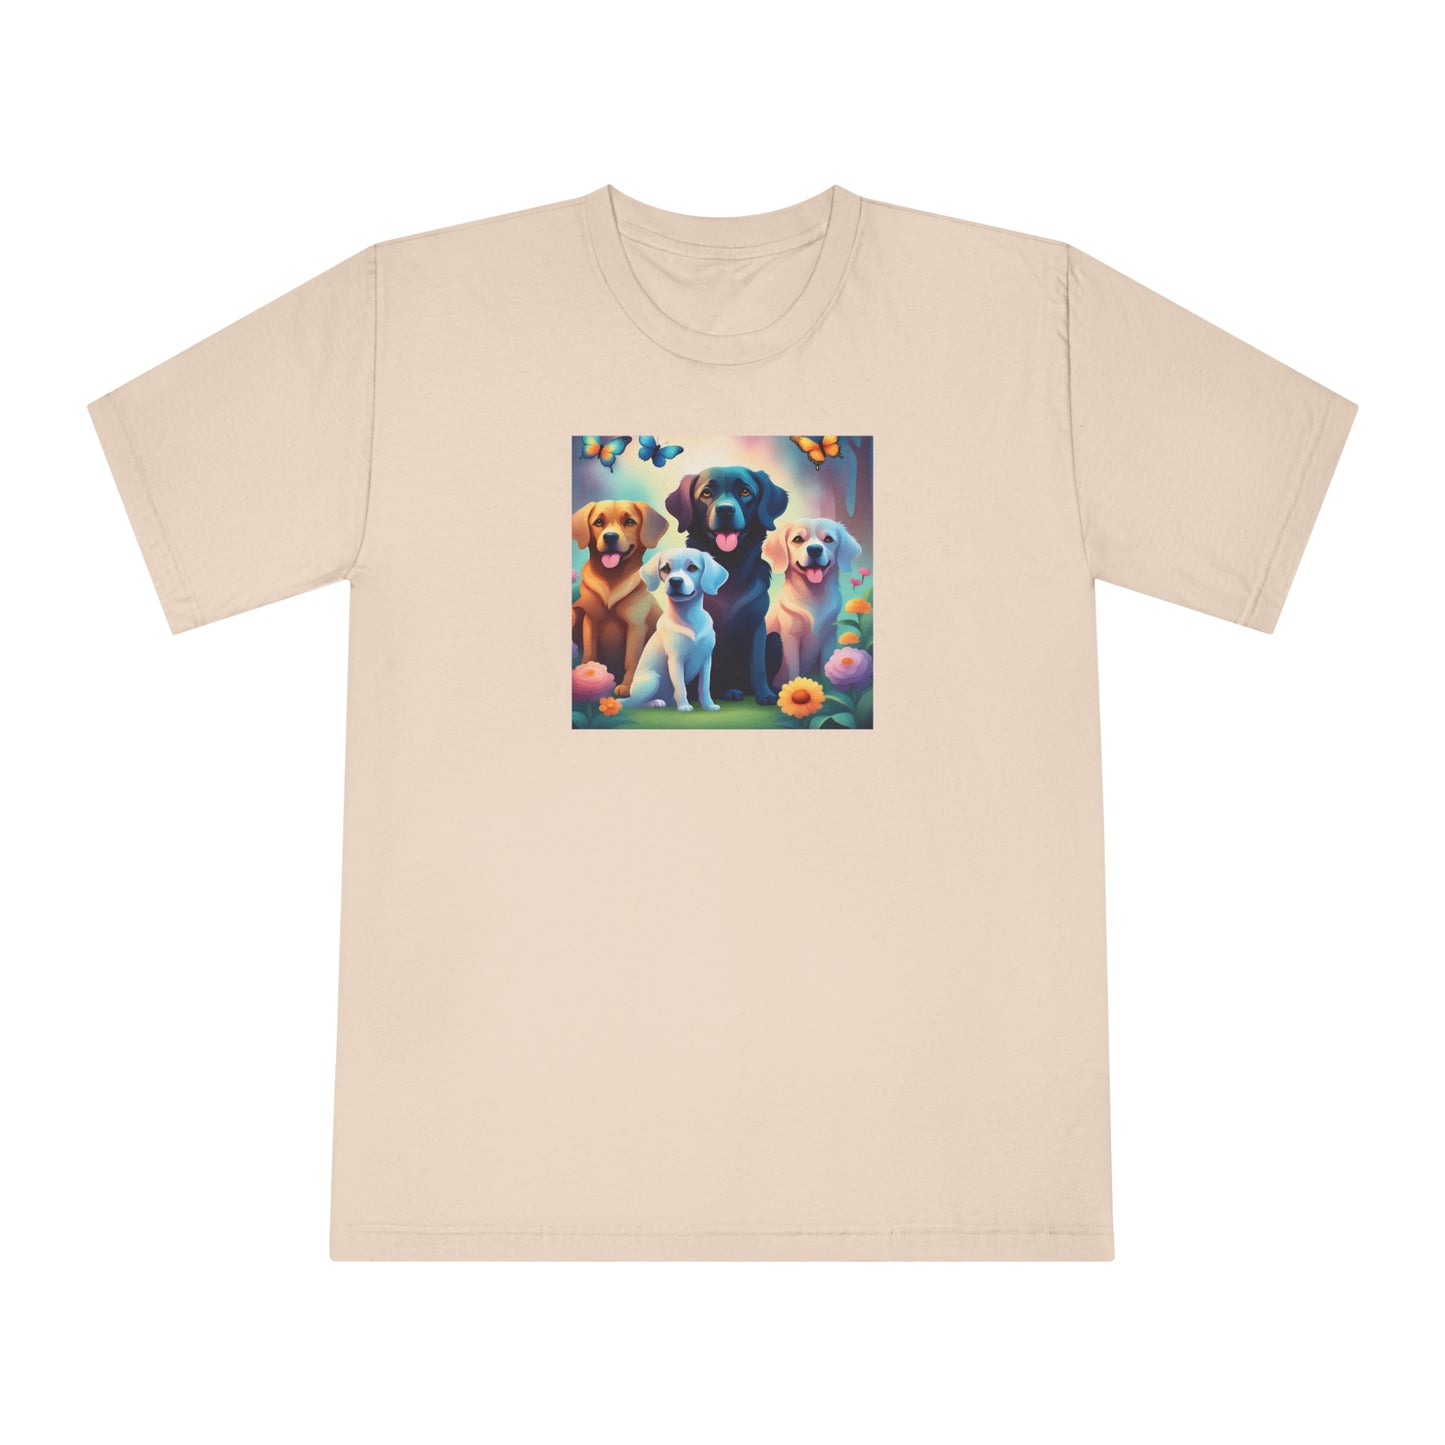 T-shirt, Dogs Image Print, American Apparel Base